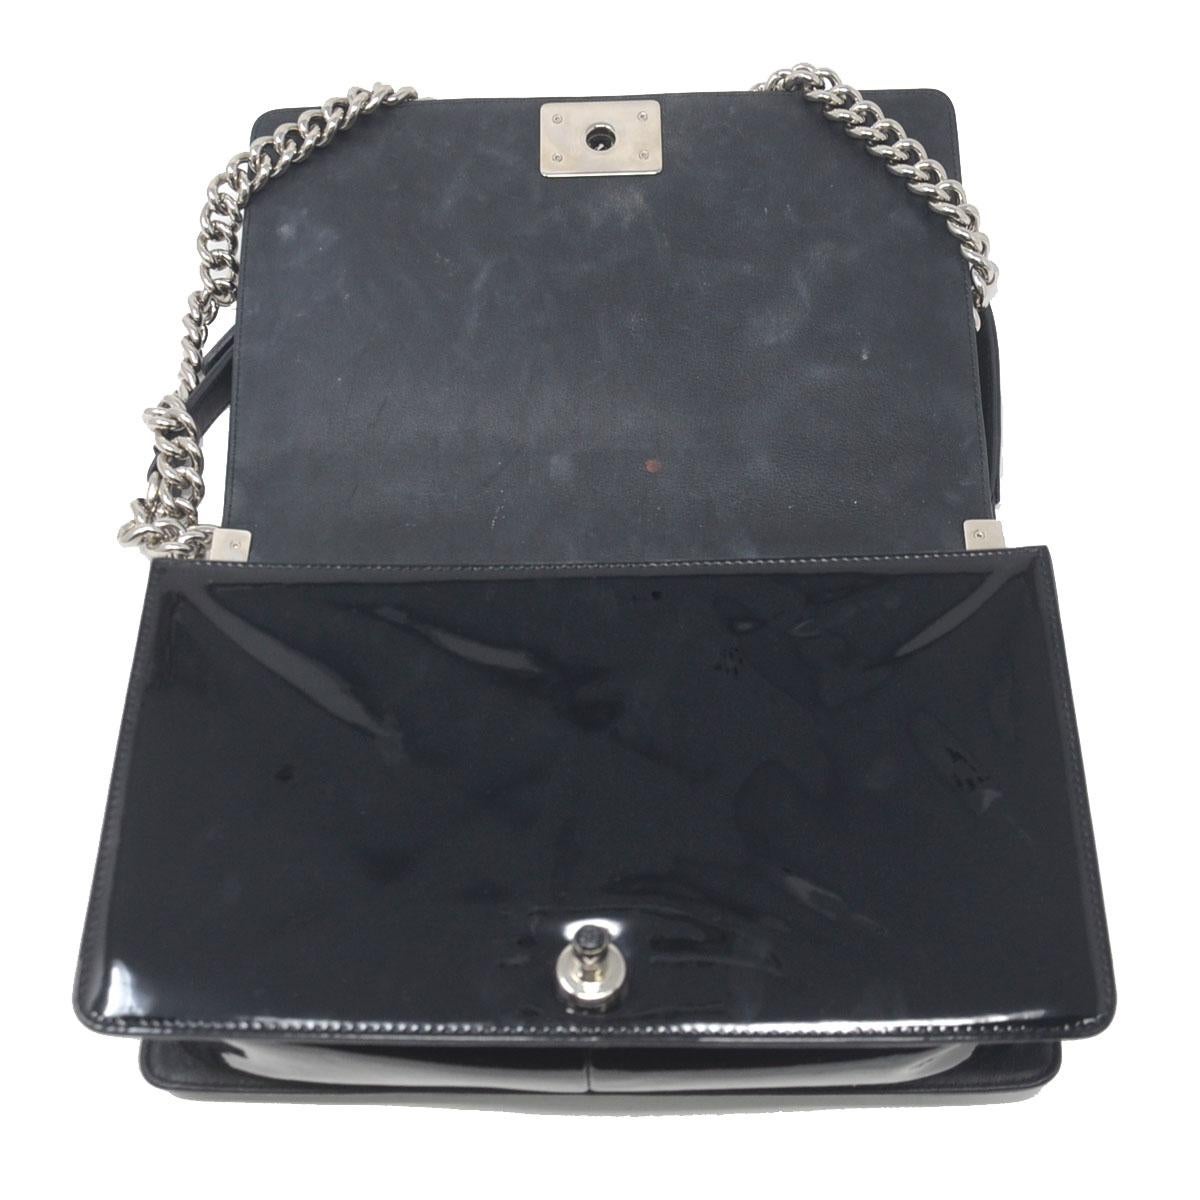 Chanel Le Boy Bag SHW Black Jumbo Patent Leather 2